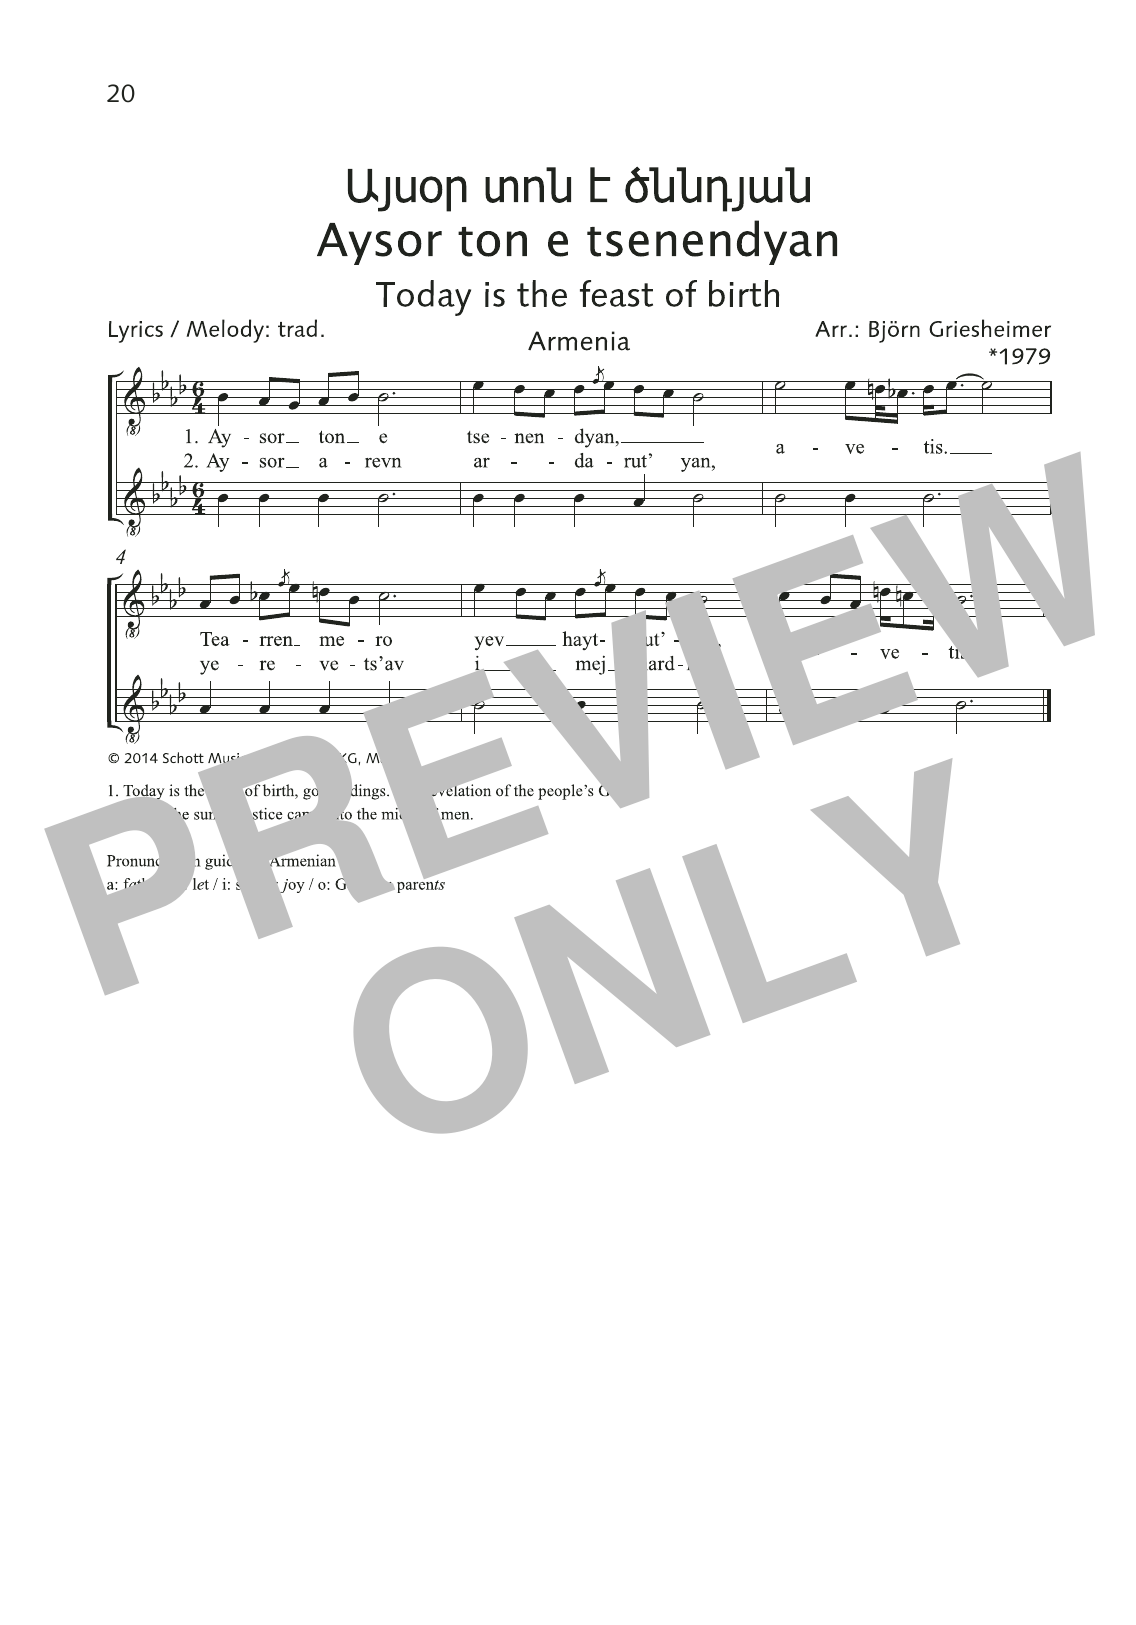 Björn Griesheimer Aysor ton e tsenendyan Sheet Music Notes & Chords for Choral - Download or Print PDF